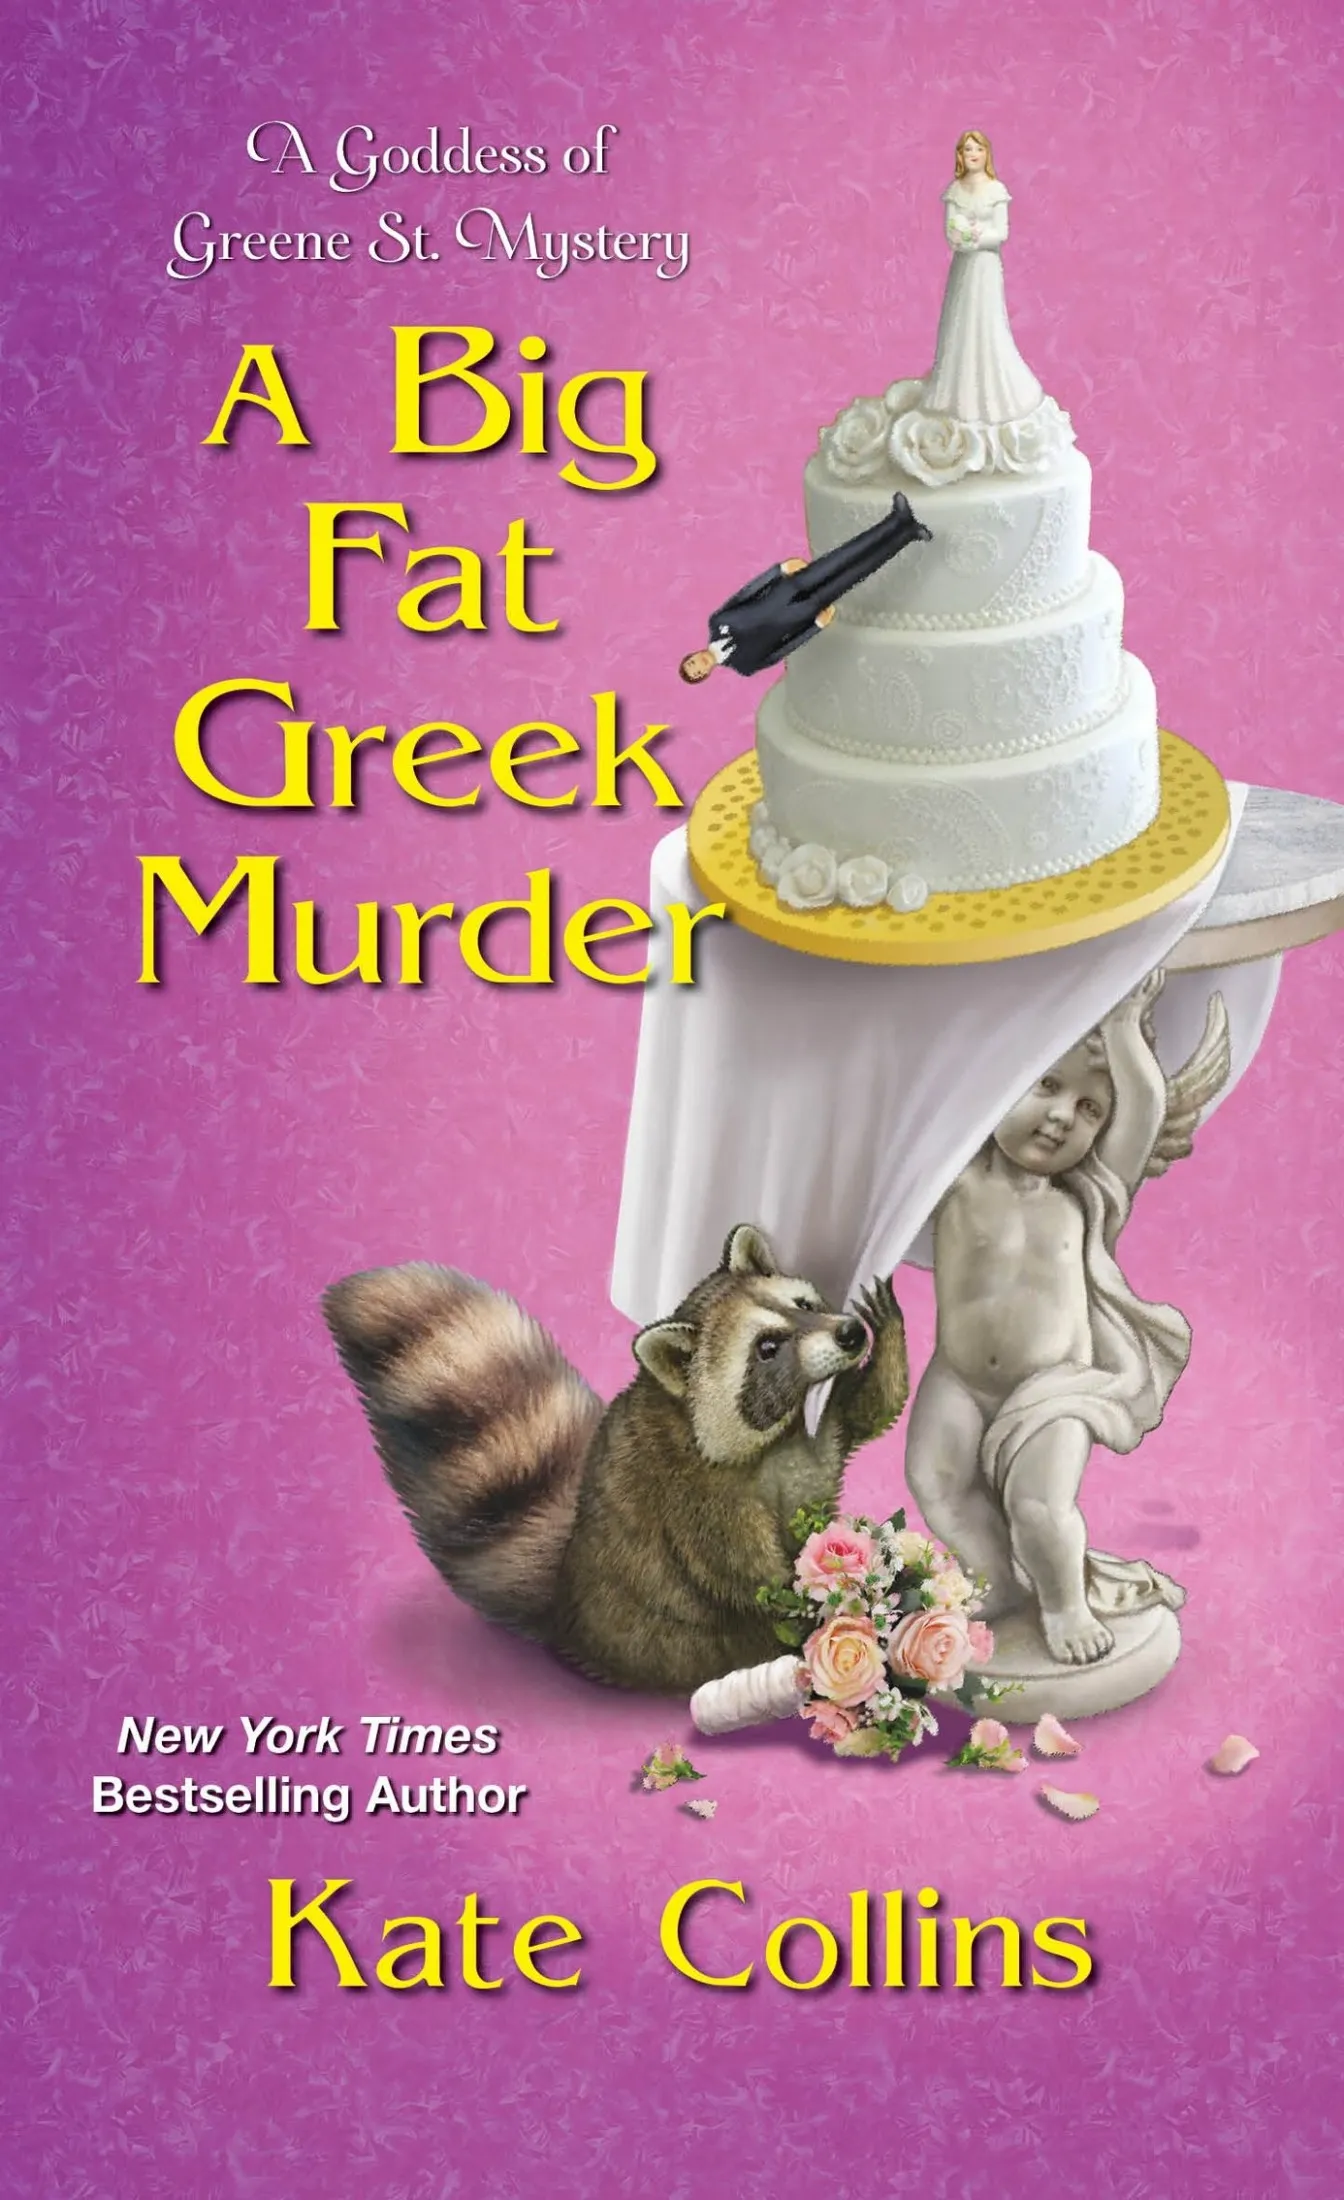 A Big Fat Greek Murder (A Goddess of Greene St. Mystery #2)